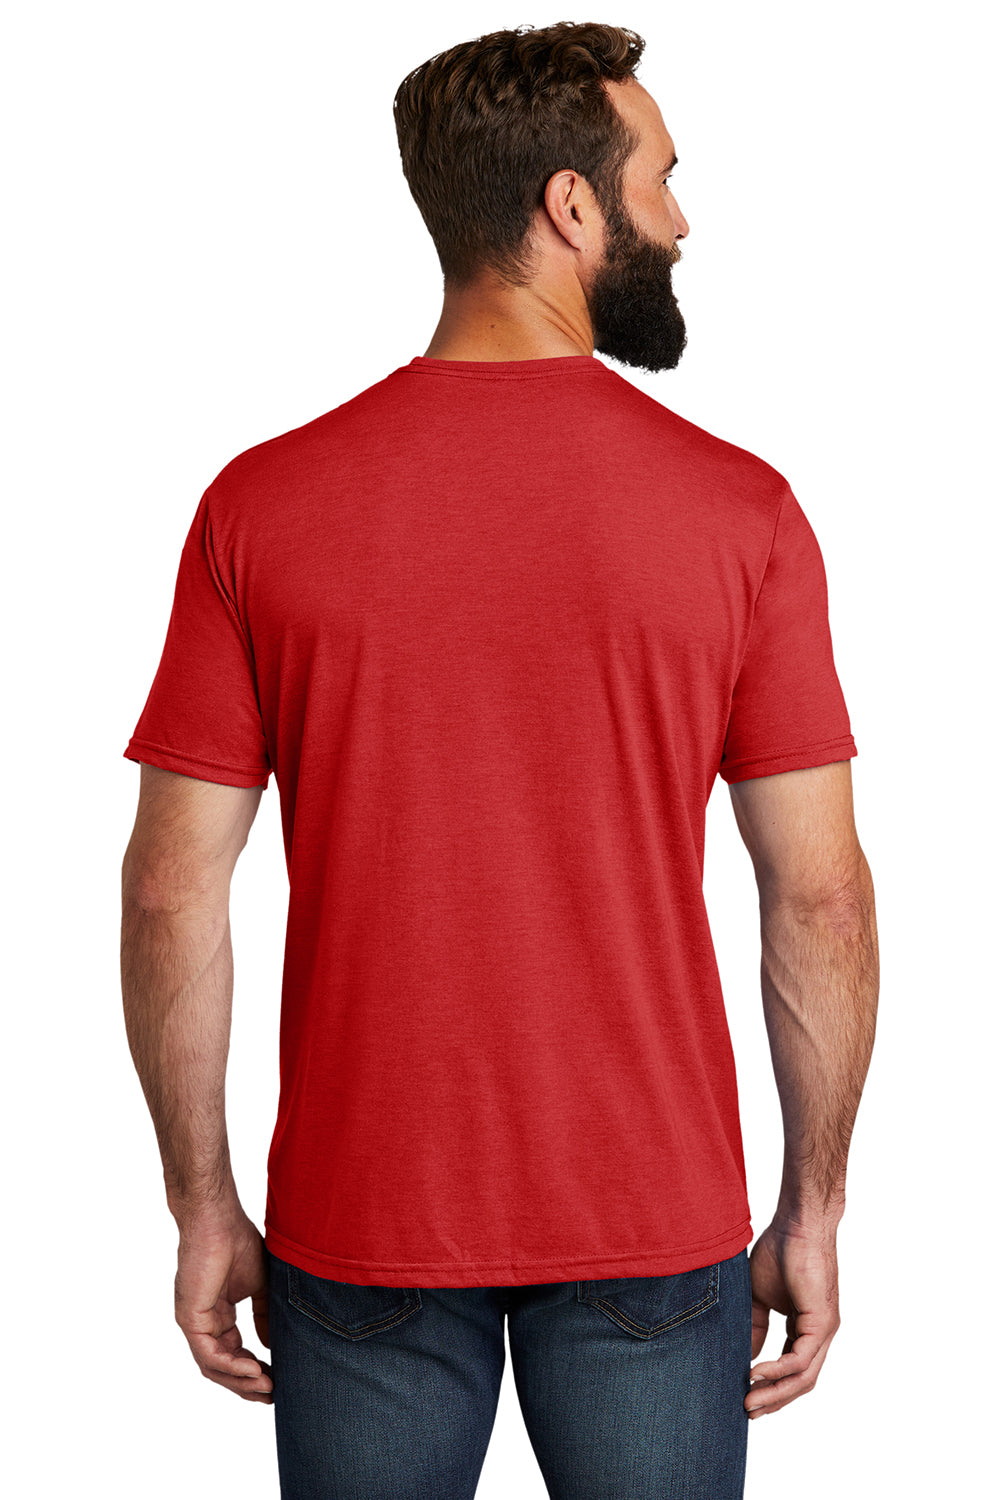 Allmade AL2004 Mens Short Sleeve Crewneck T-Shirt Rise Up Red Model Back